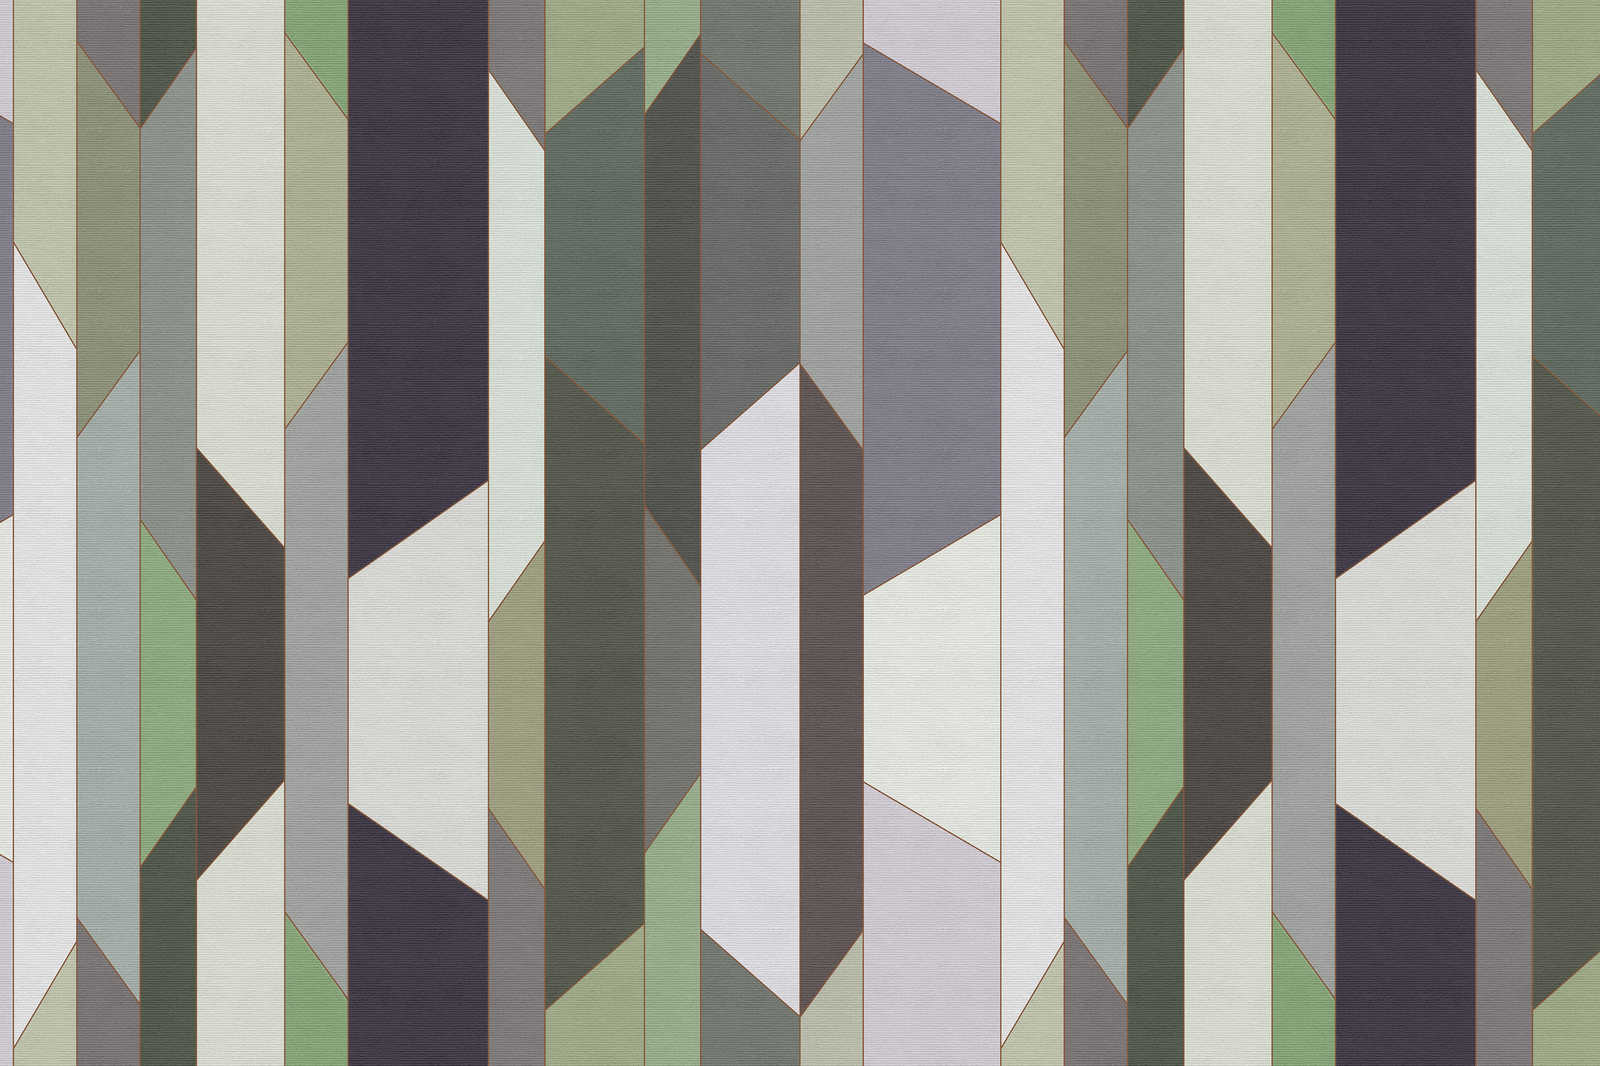             Fold 1 - Leinwandbild mit Streifendesign im Retro Stil – 0,90 m x 0,60 m
        